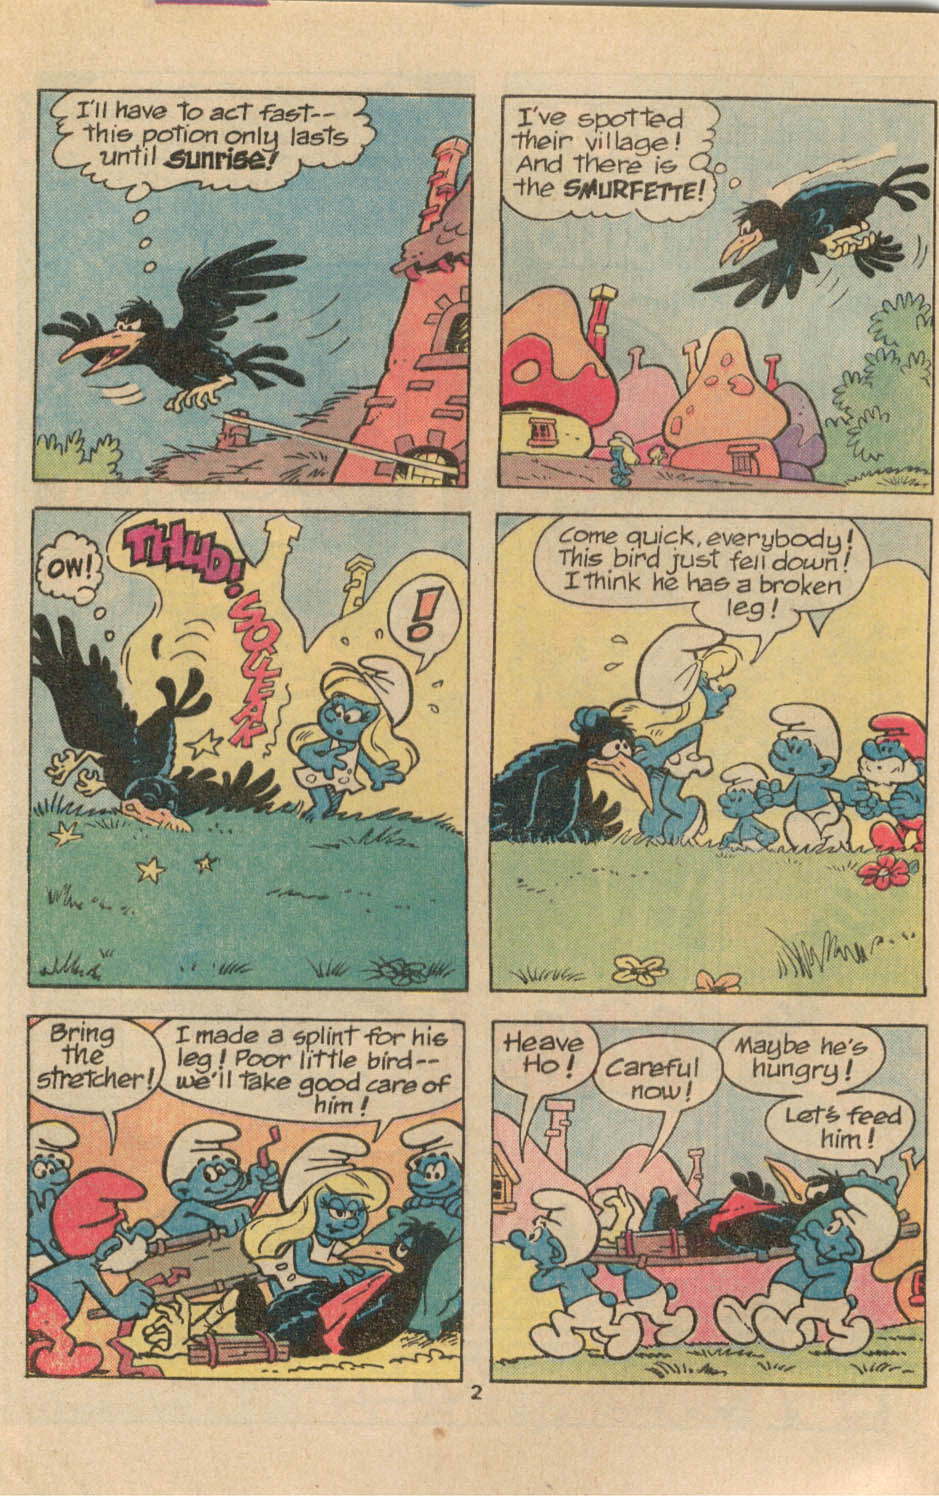 Smurfs #1 | The Smurf Plane | Marvel Comics | Bronze Age | Vintage Comic 